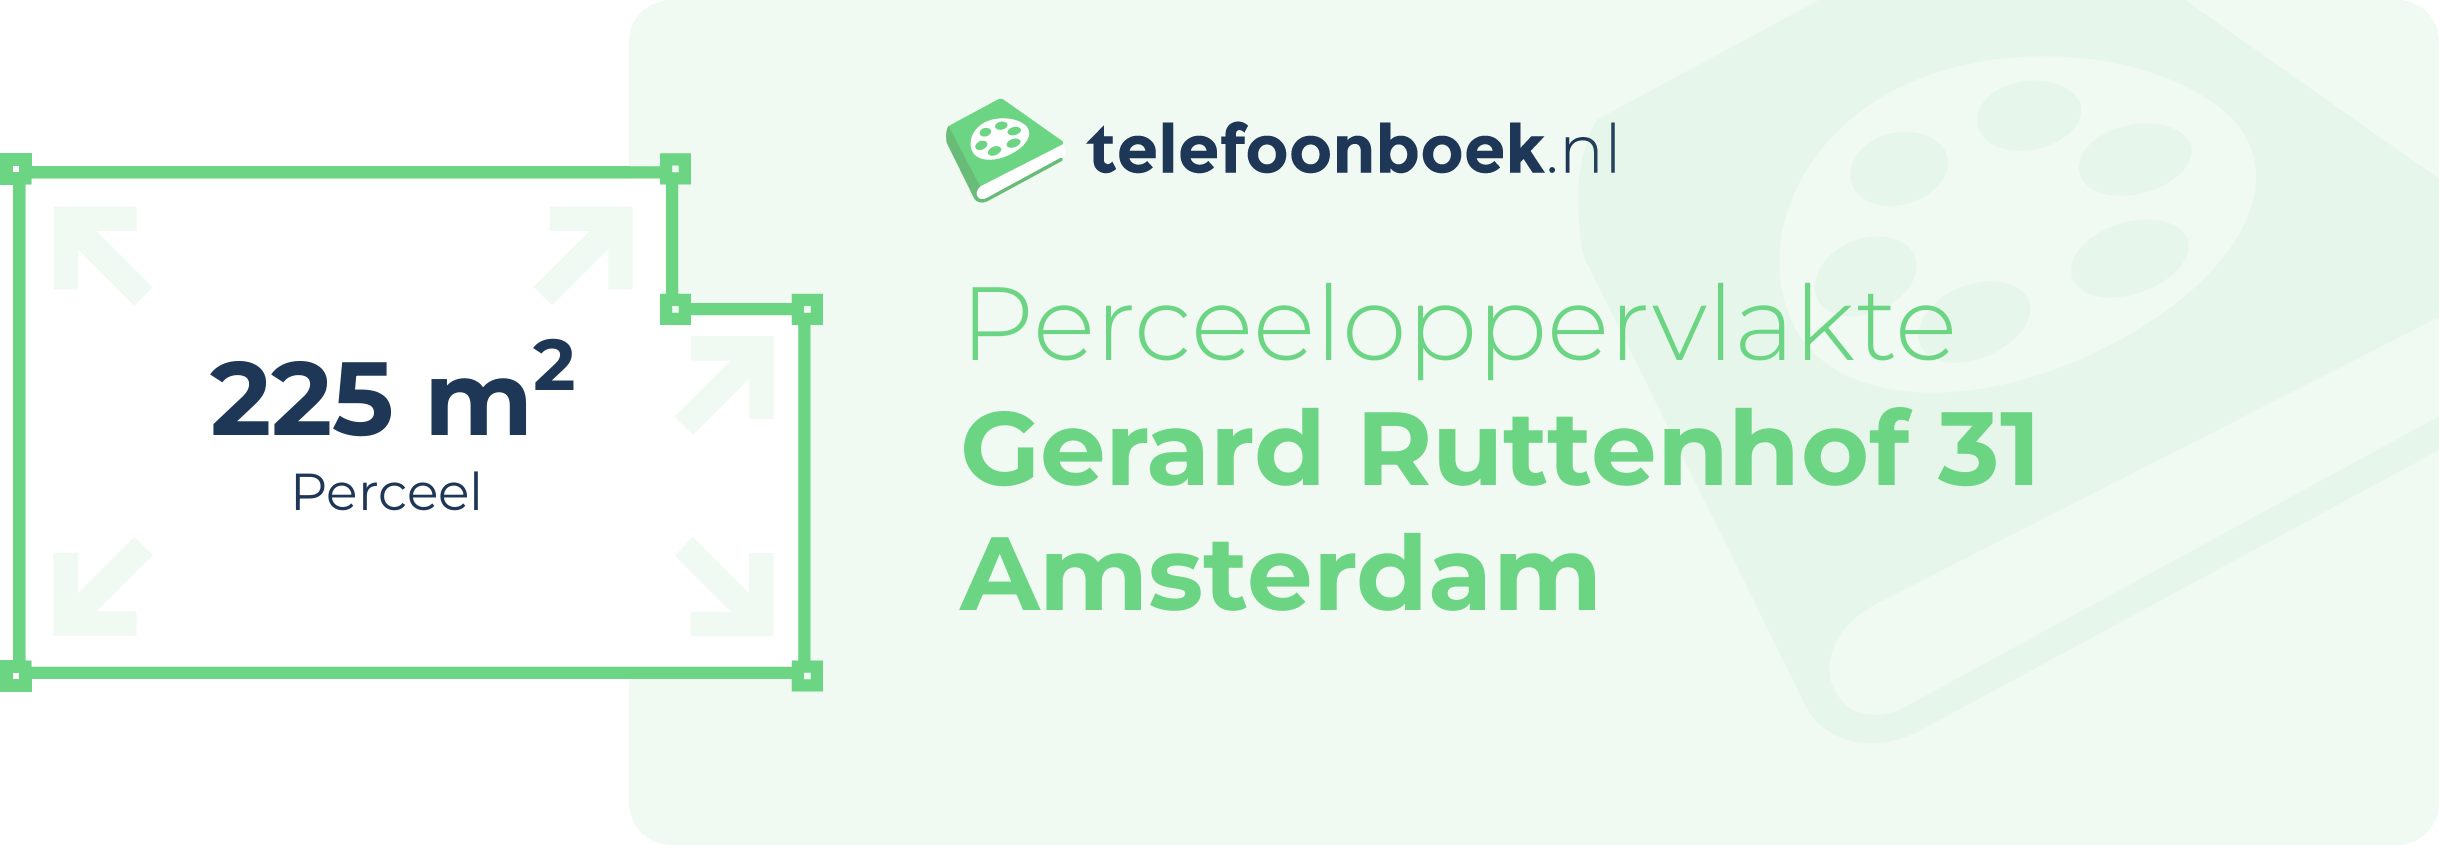 Perceeloppervlakte Gerard Ruttenhof 31 Amsterdam